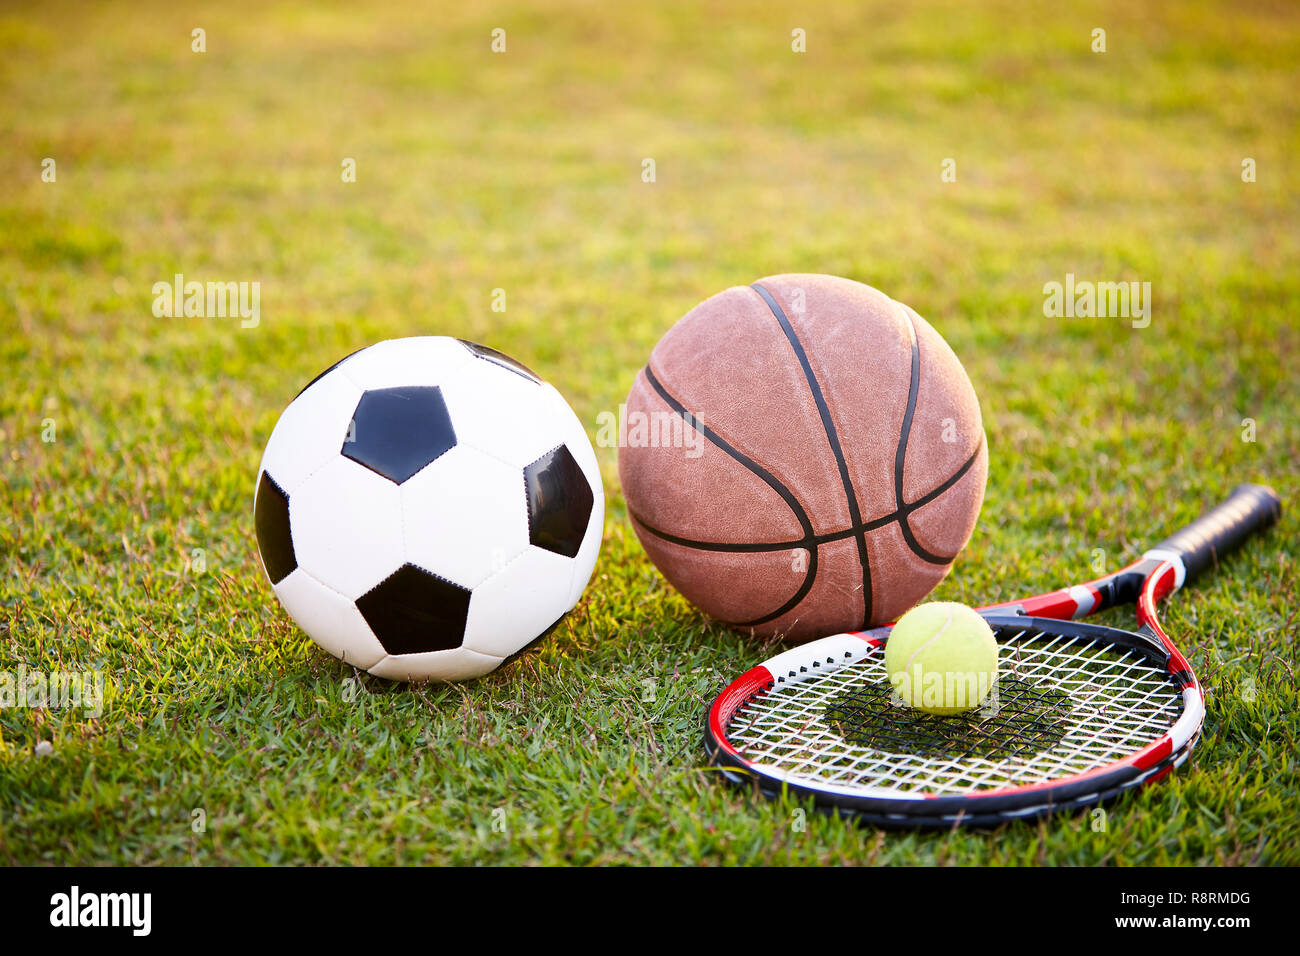 football soccer ball basketball tennis ball and racket laid on grass at sunset Stock Photo